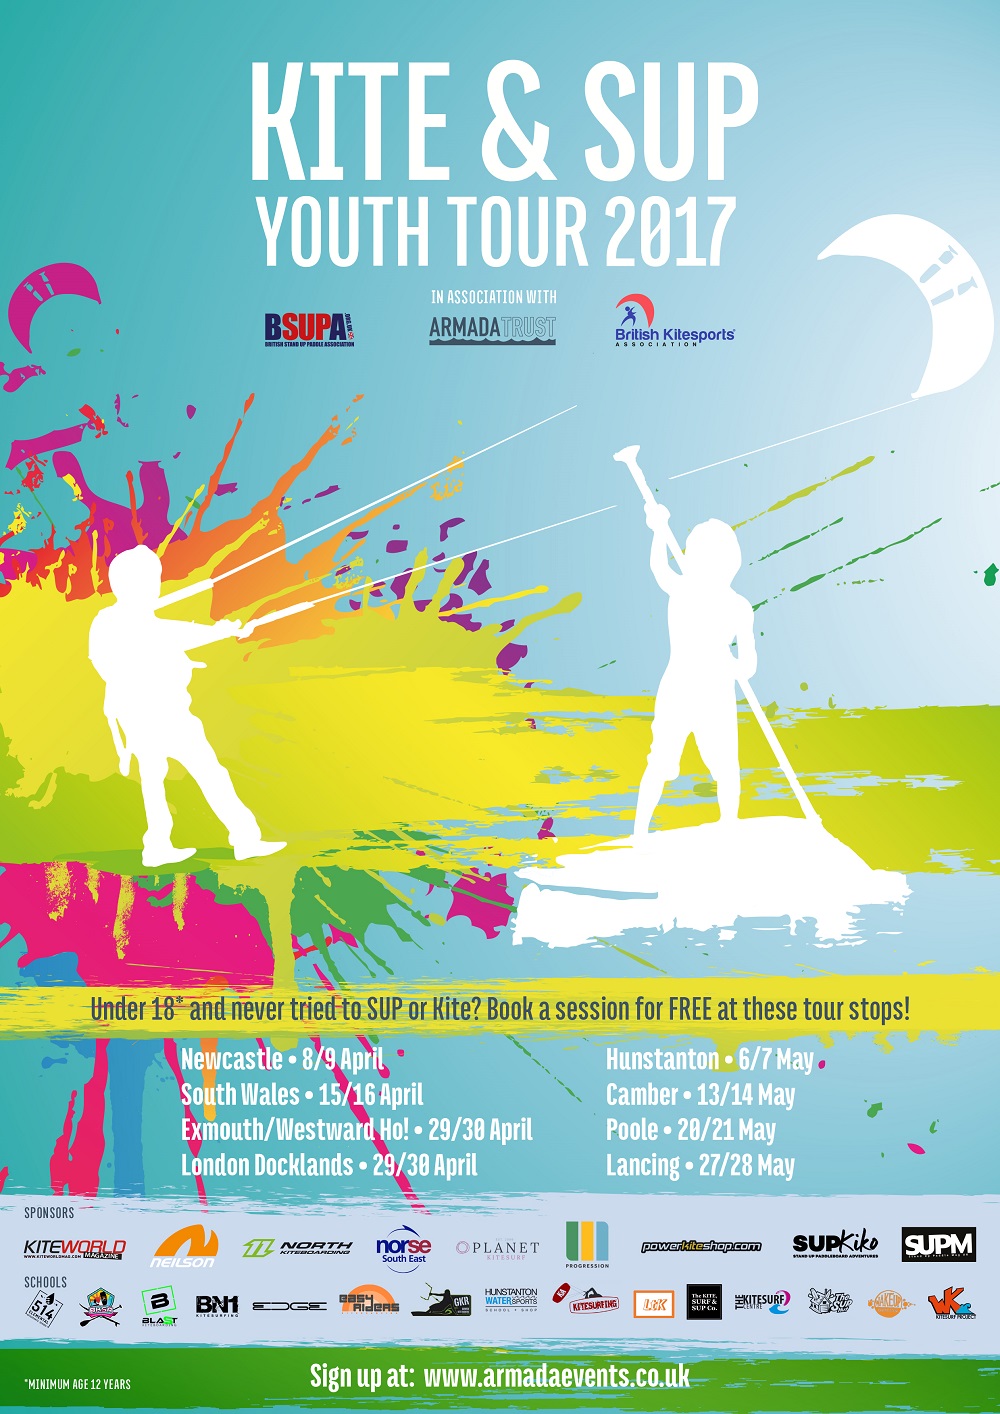 Kite & SUP Youth Tour#5